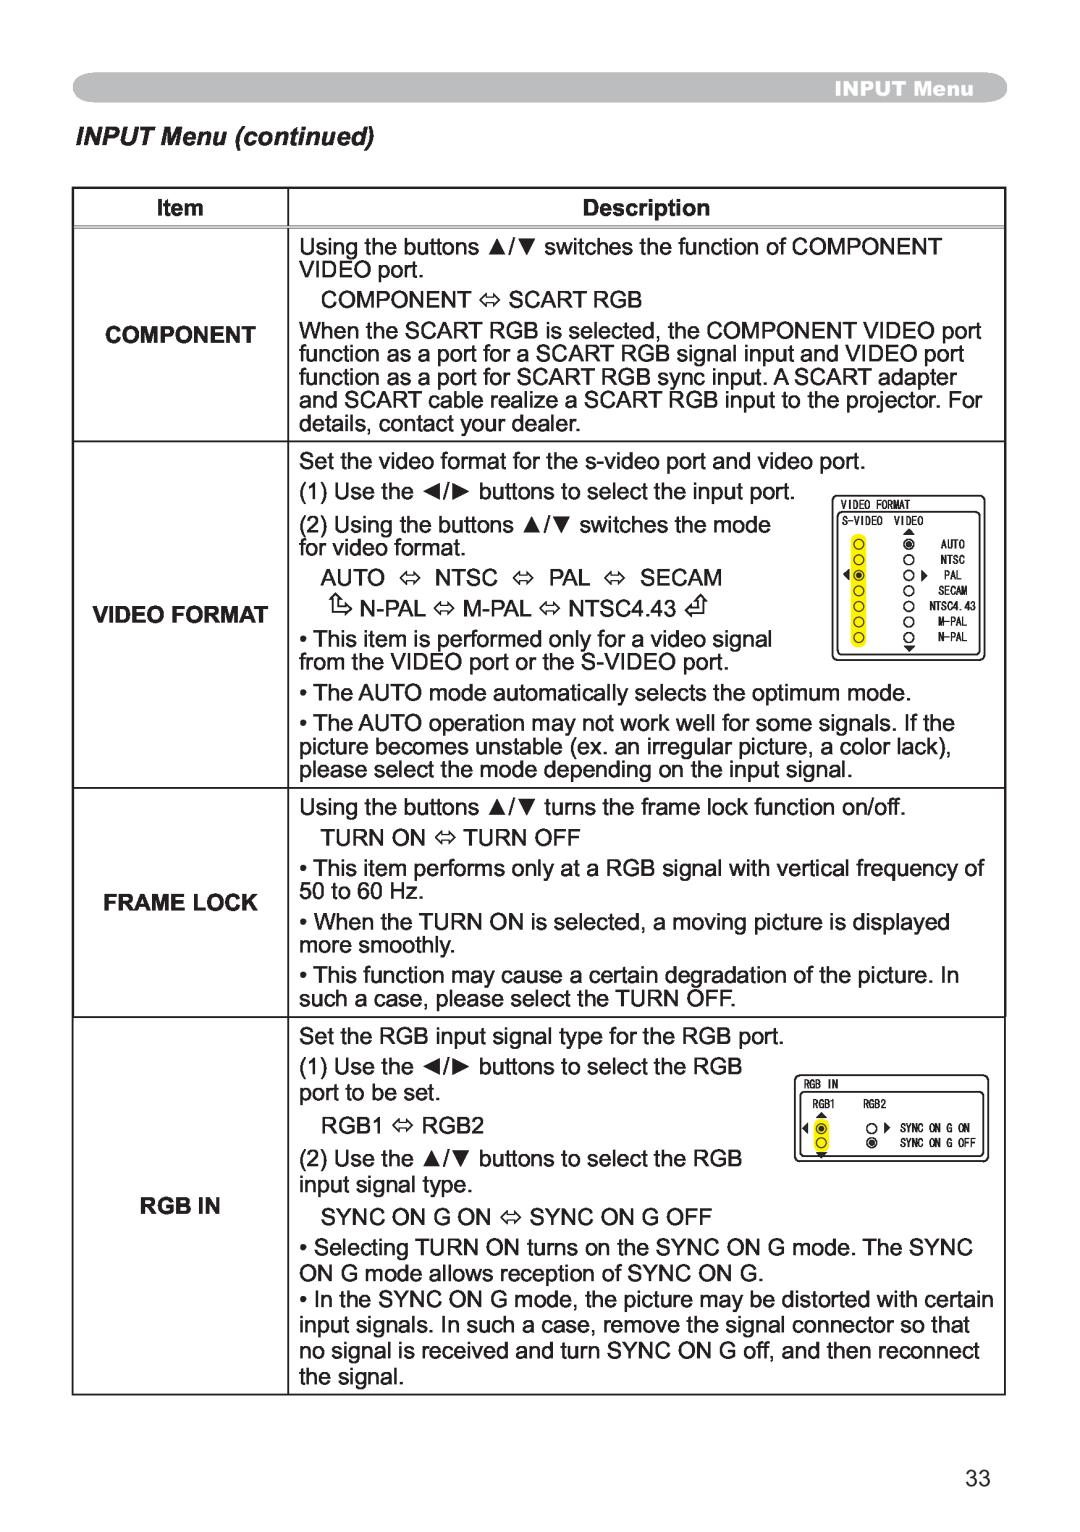 Hitachi ED-X12 user manual INPUT Menu continued, Item, Description, Video Format, Frame Lock, Rgb In 